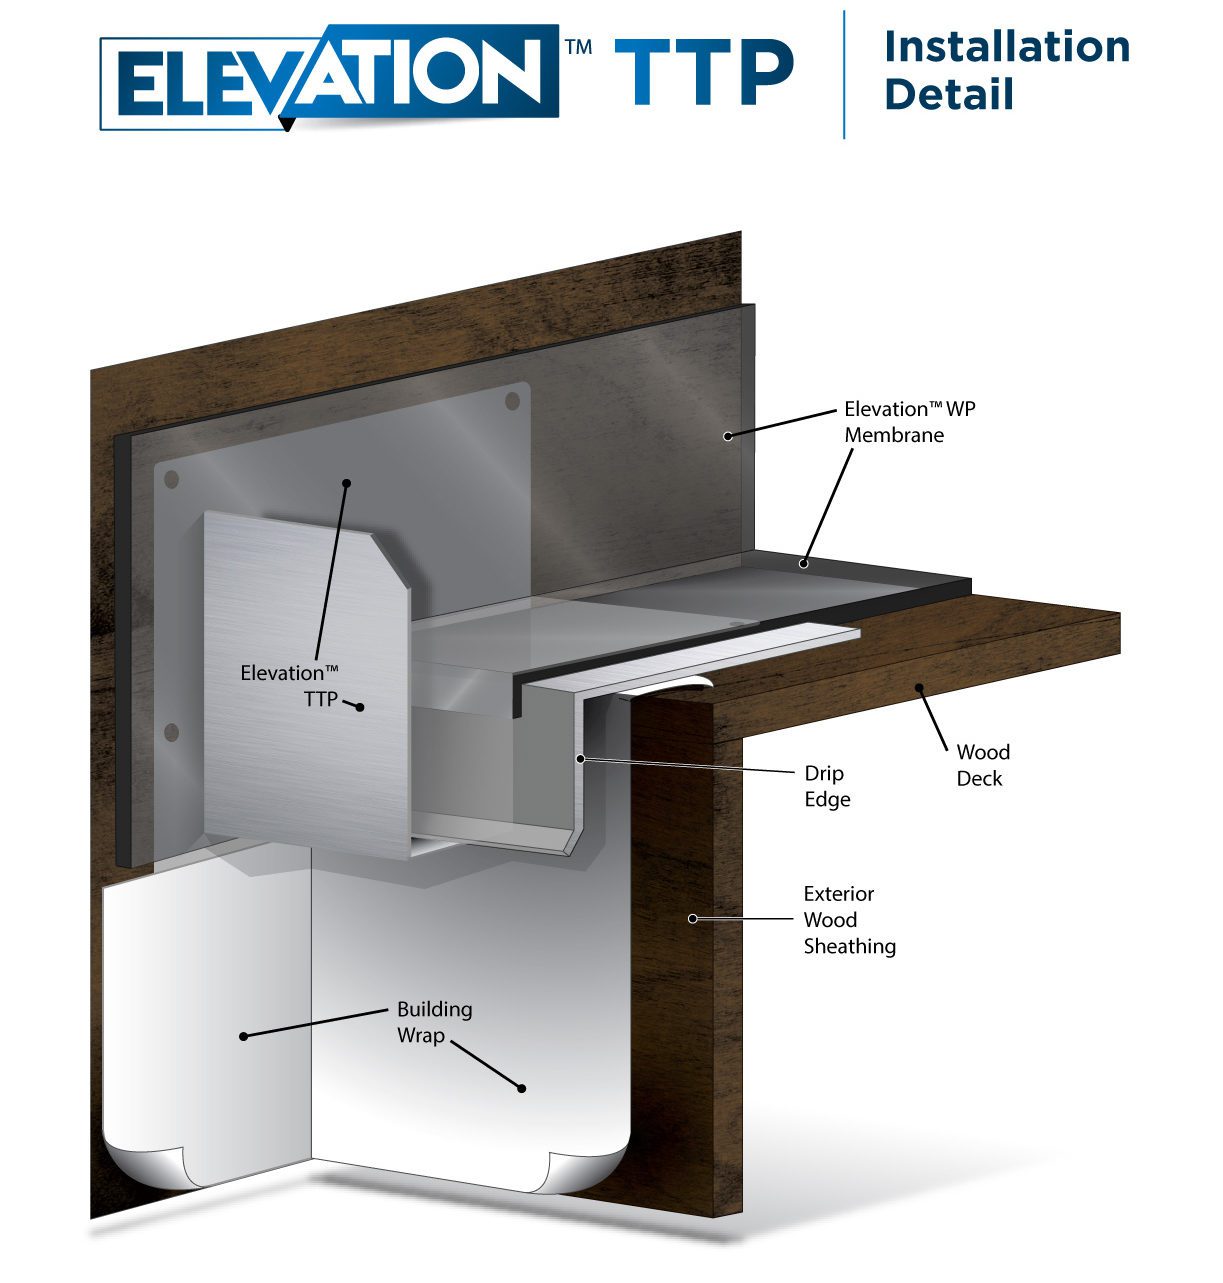 Elevation TTP Installation Detail - Formulated Materials